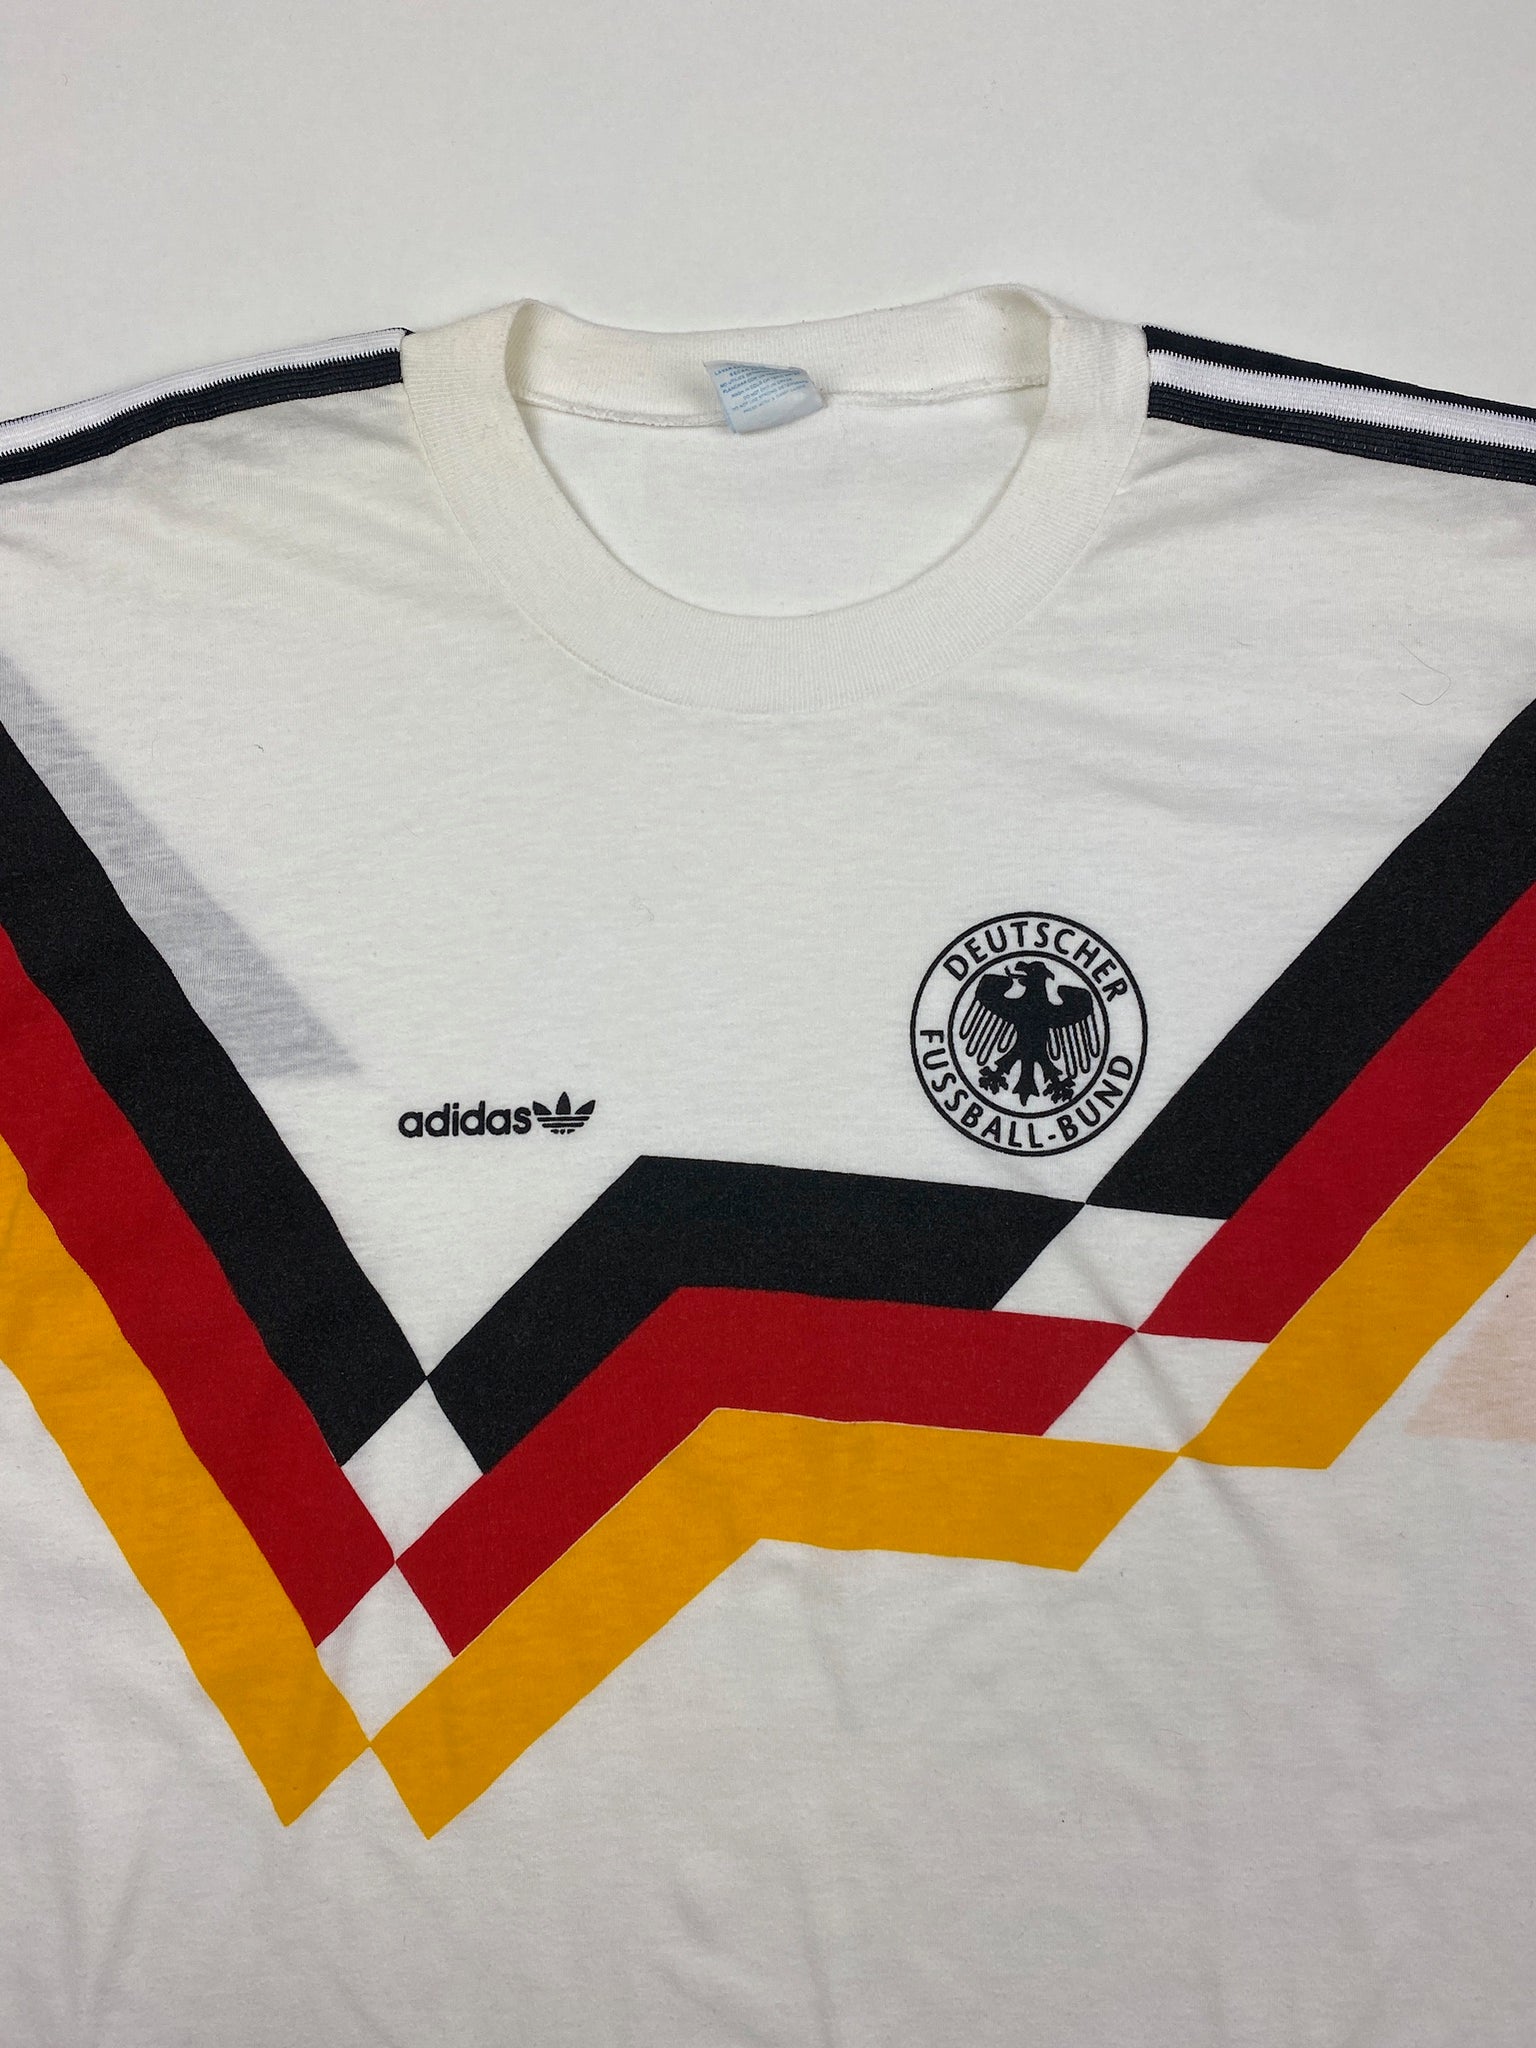 Camiseta Adidas Alemania 89/90 - XL – Vintage